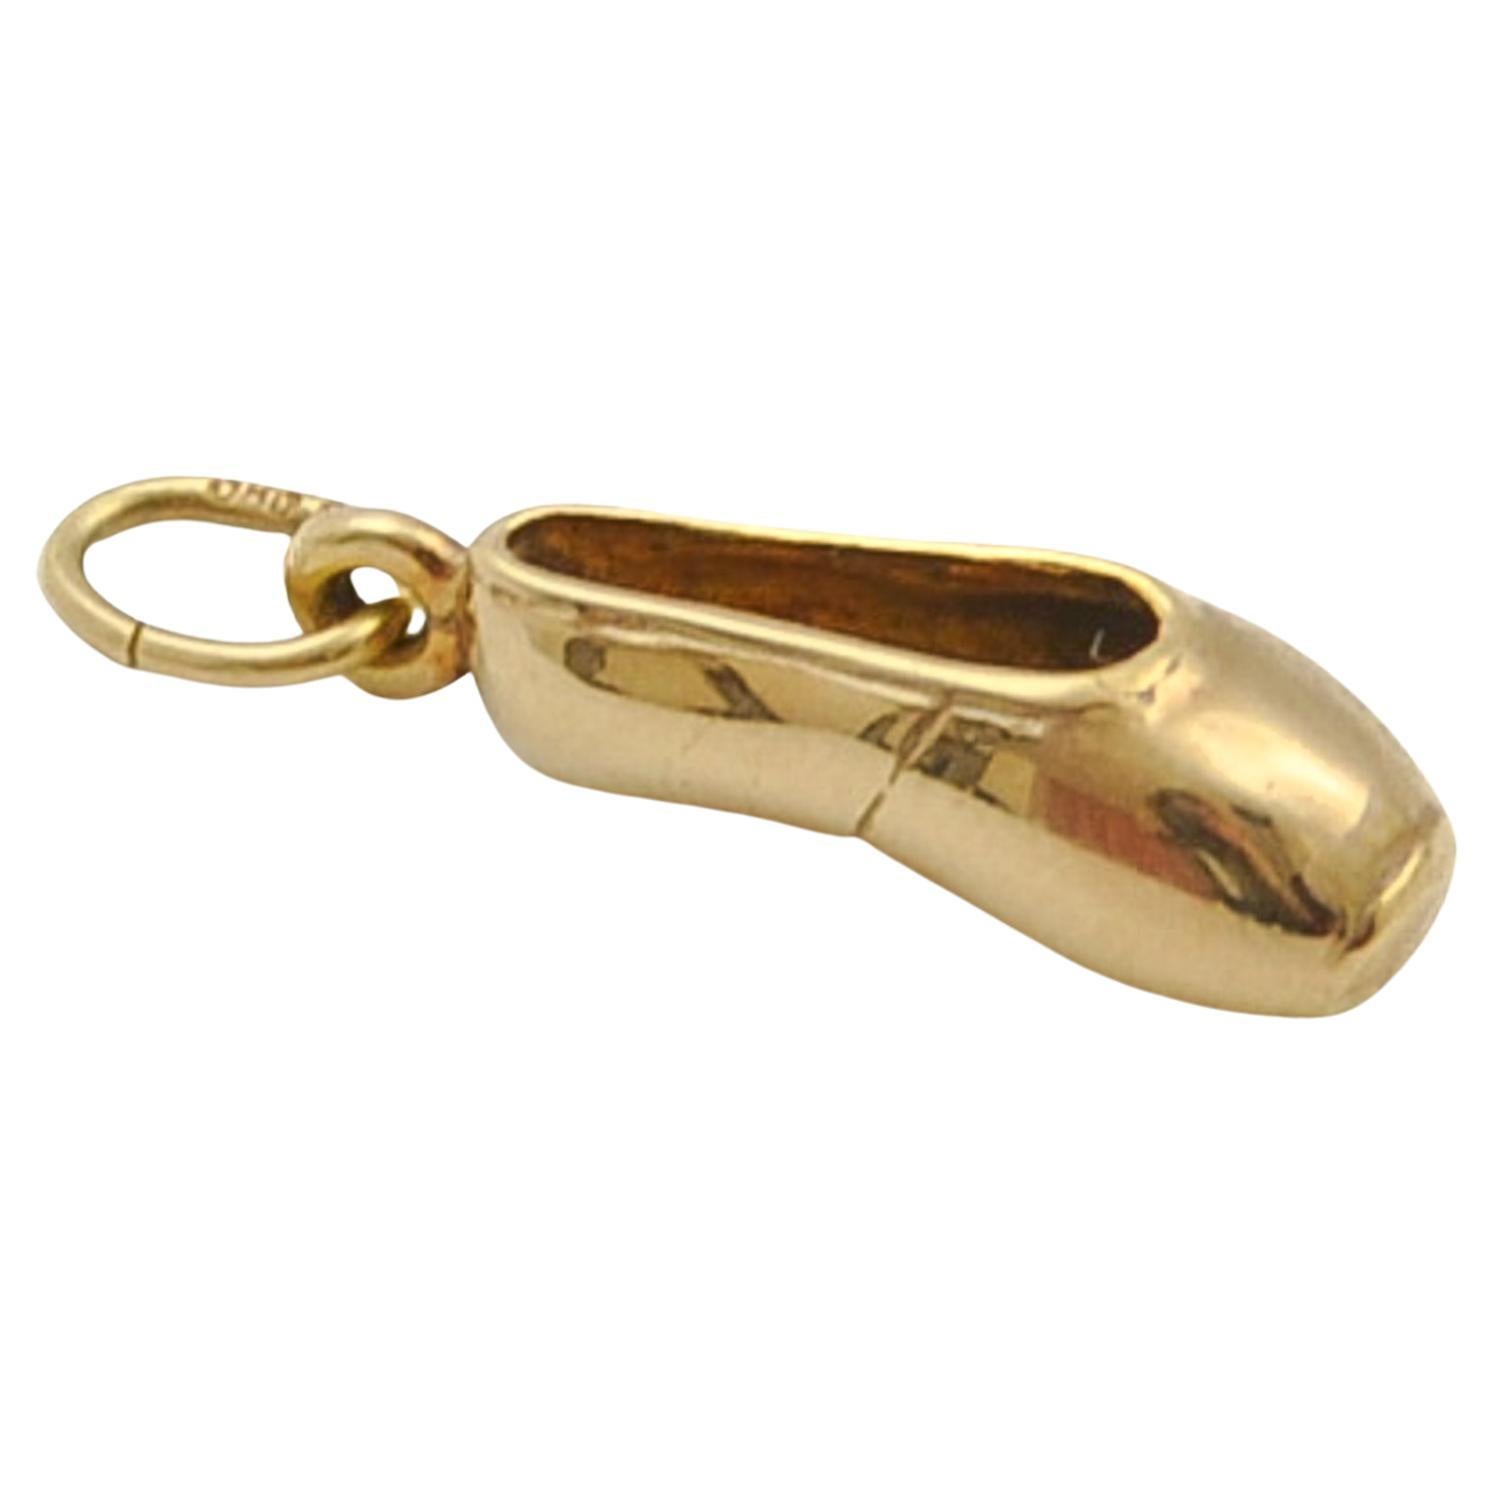 Vintage 14 Karat Gold Ballet Dancing Shoe Charm Pendant